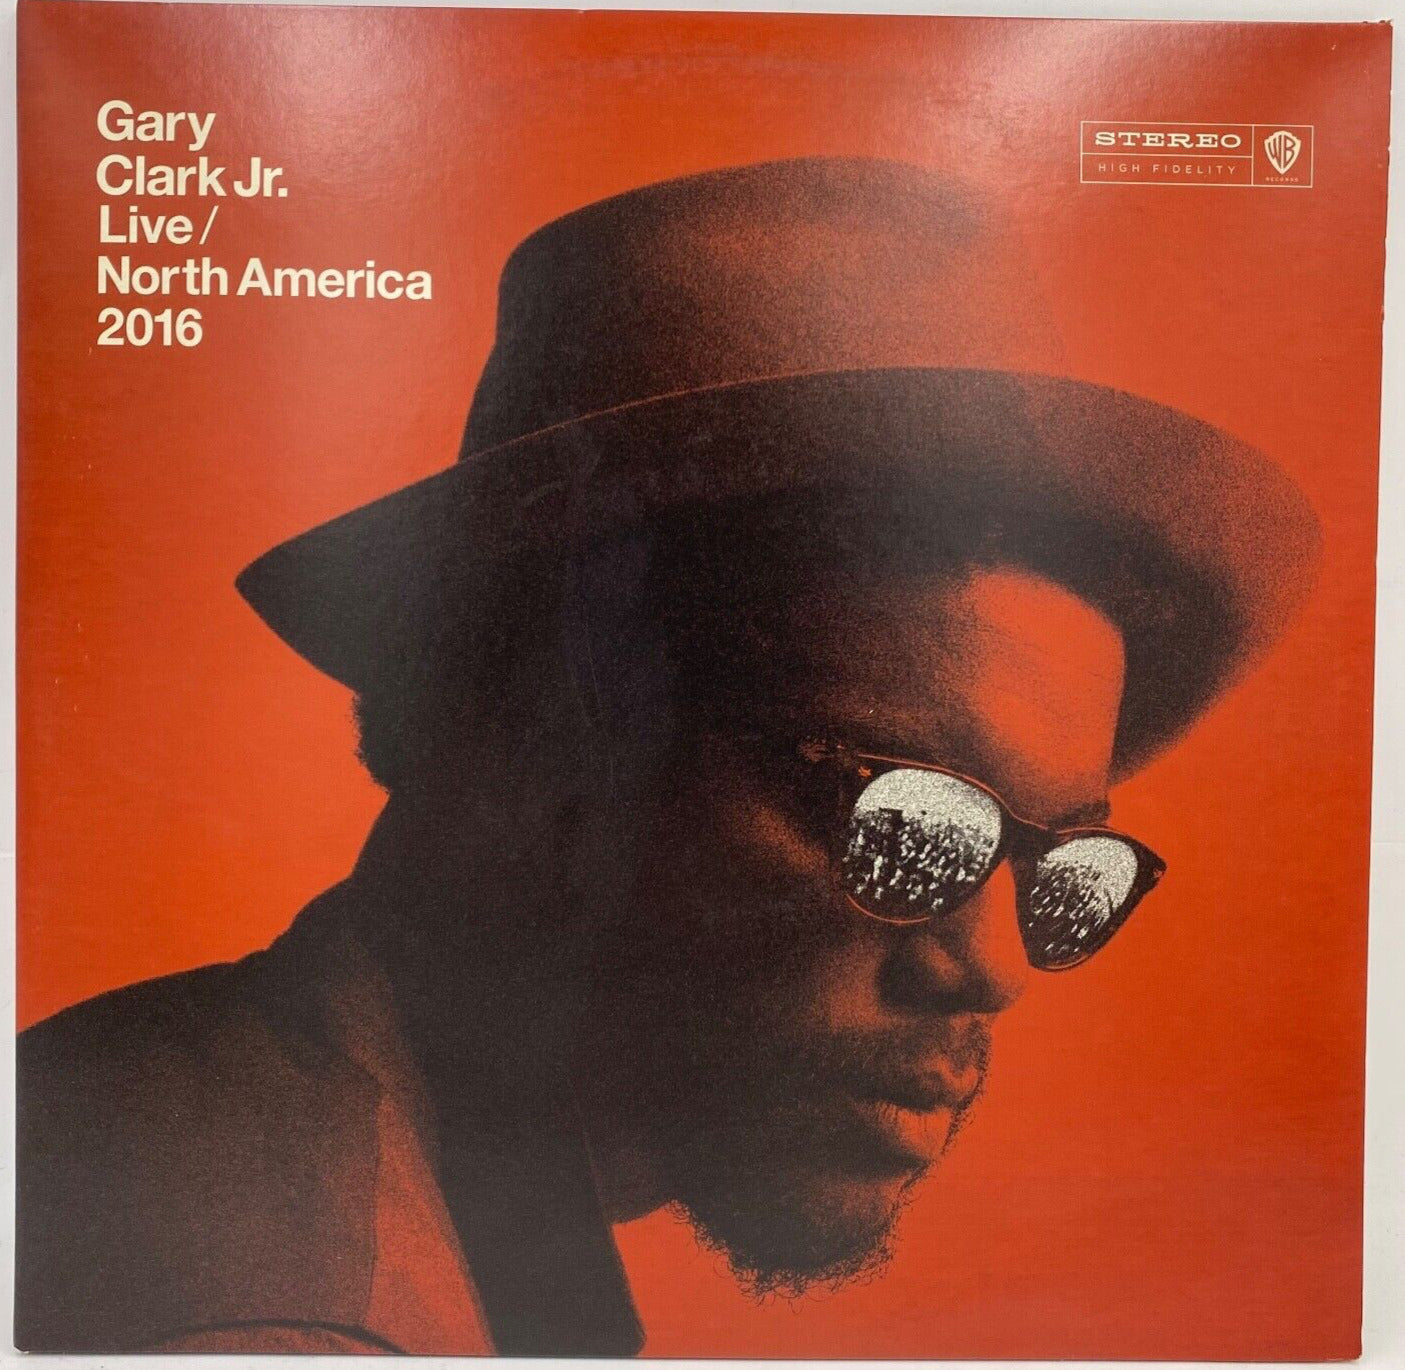 Gary Clark Jk. - Live North American 2016(Limited Edition Pink Vinyl 2LP),Warner